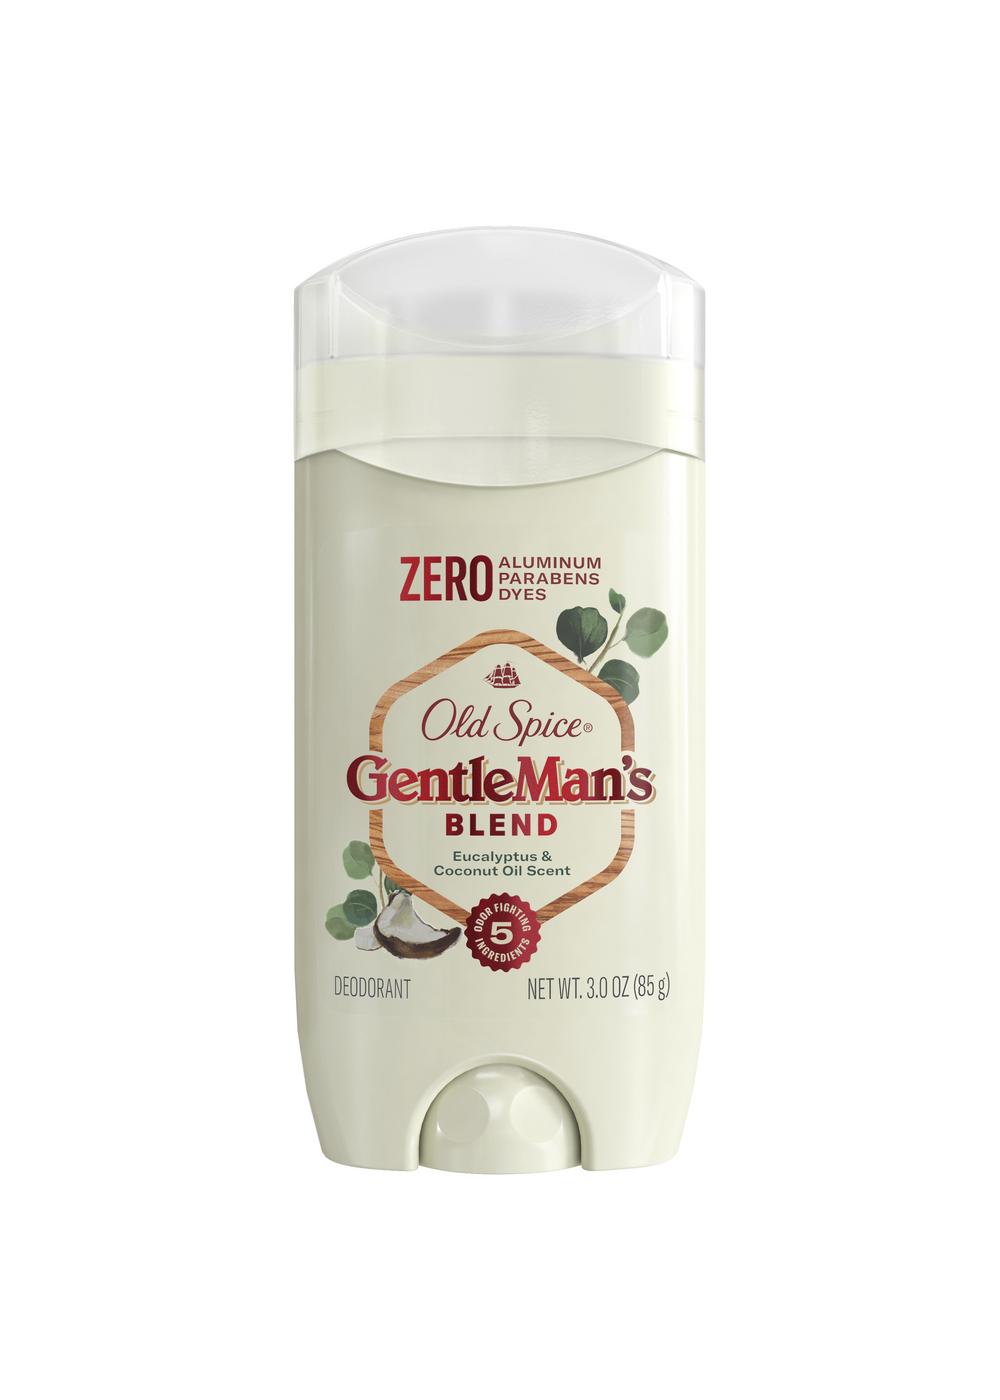 Old Spice Gentleman's Blend Deodorant - Eucalyptus & Coconut Oil; image 1 of 9